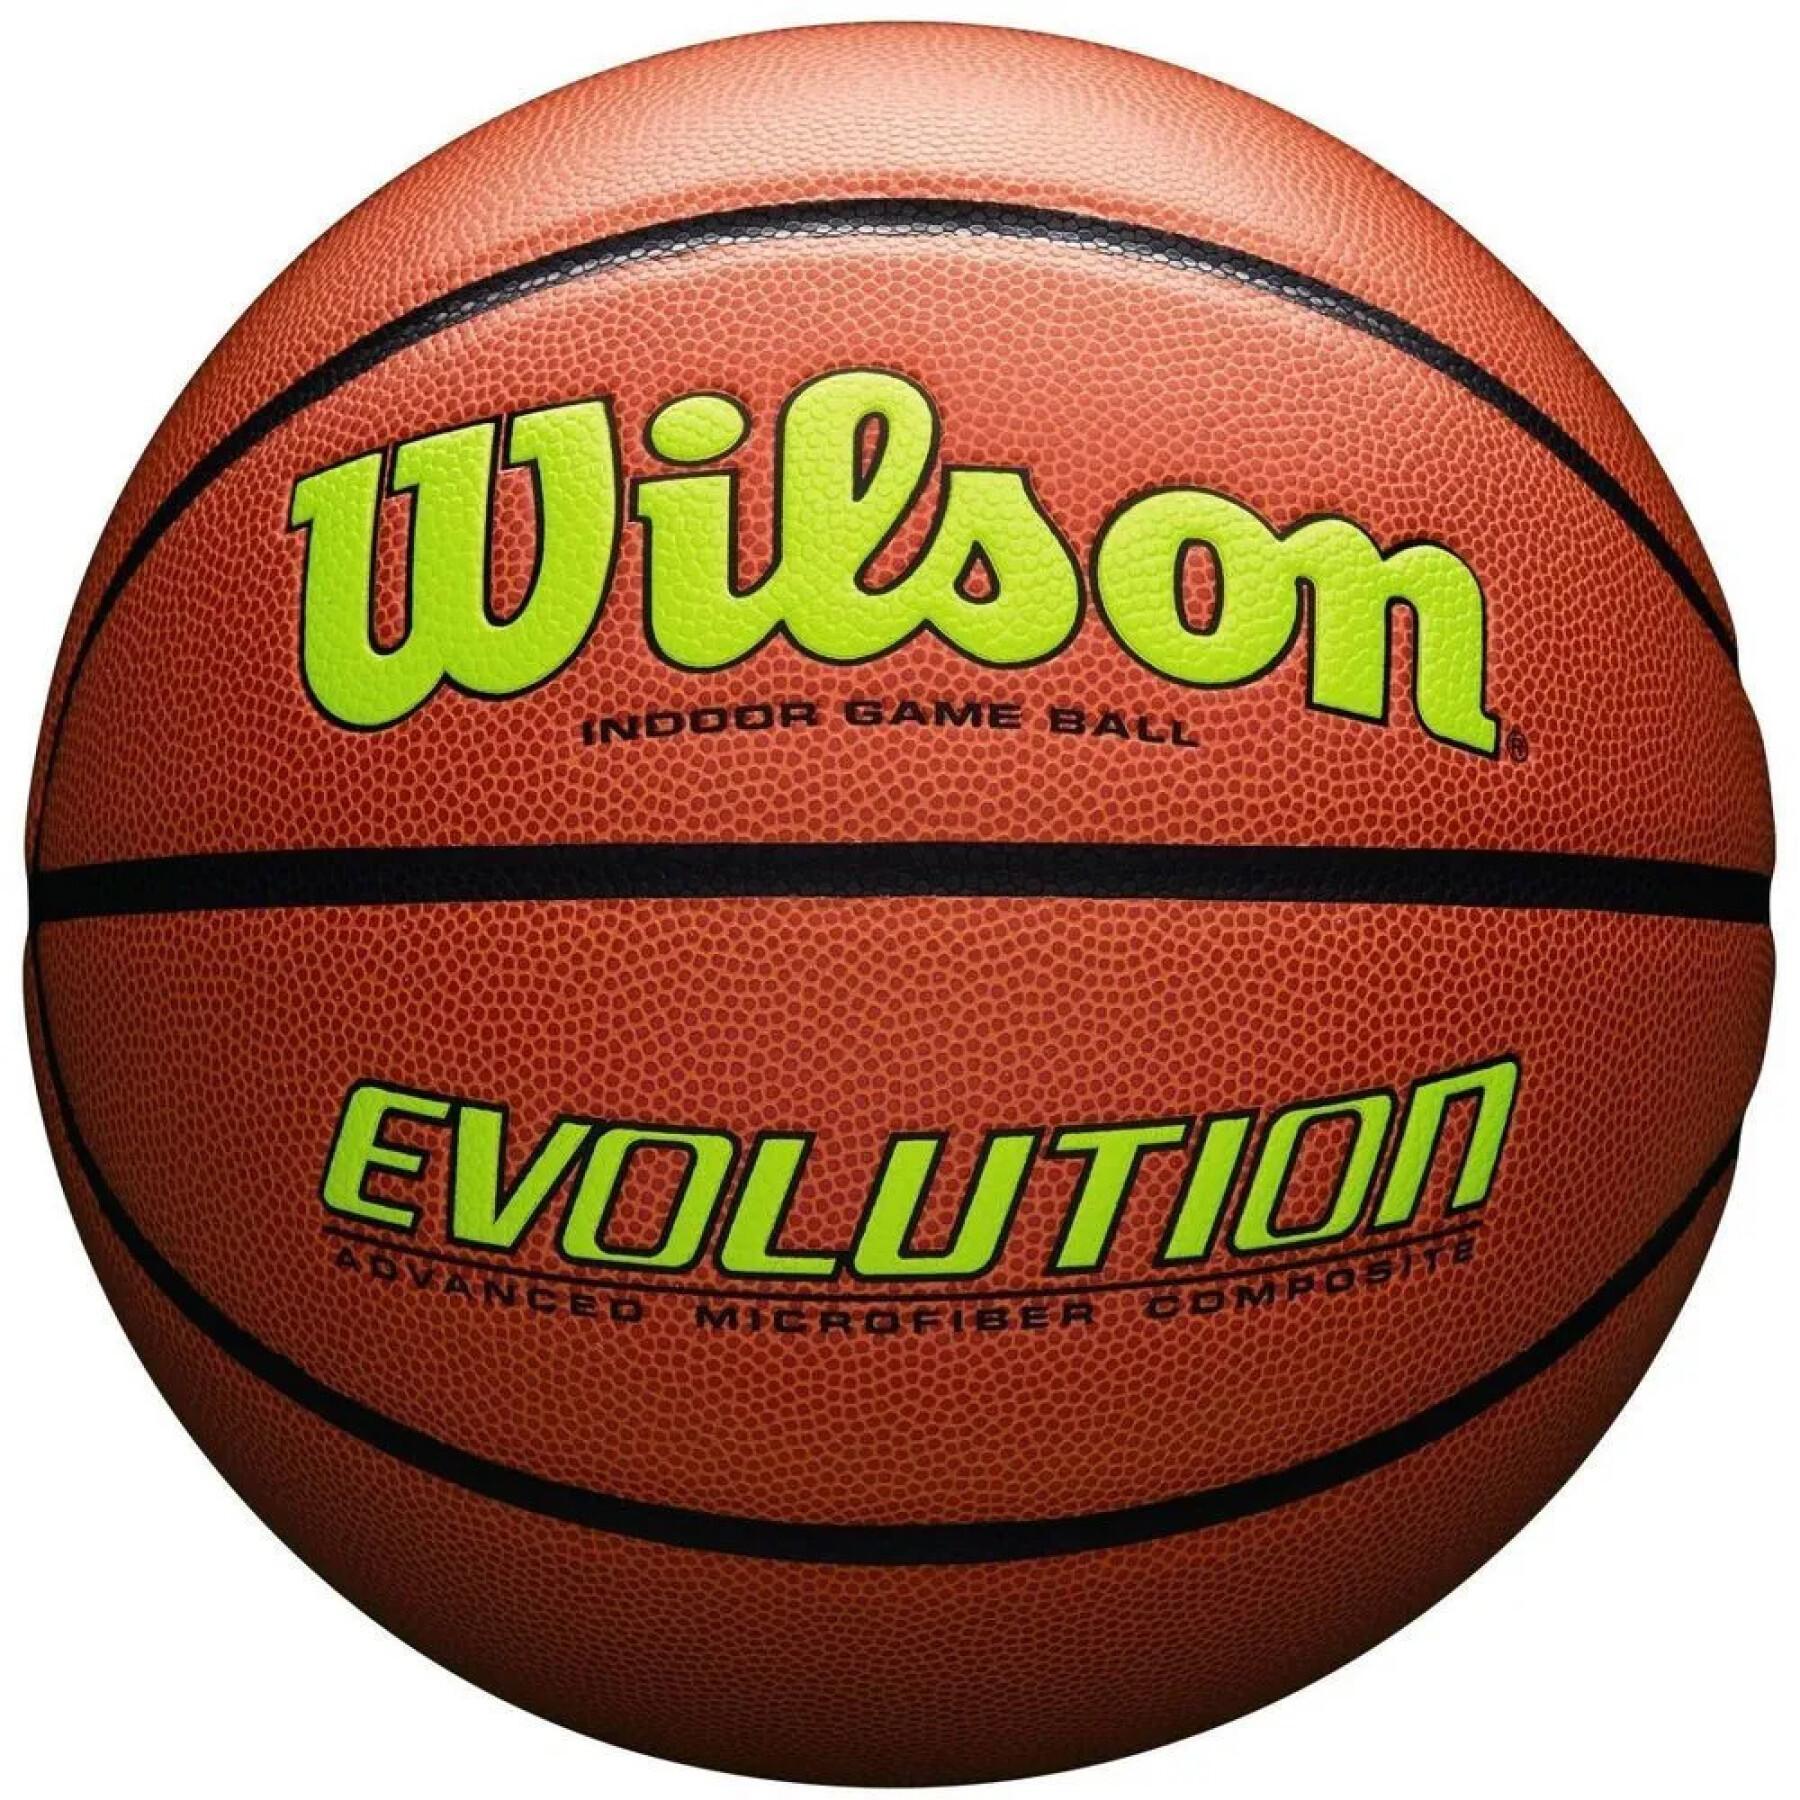 Ballon Wilson Evolution 295 Game ball OYE